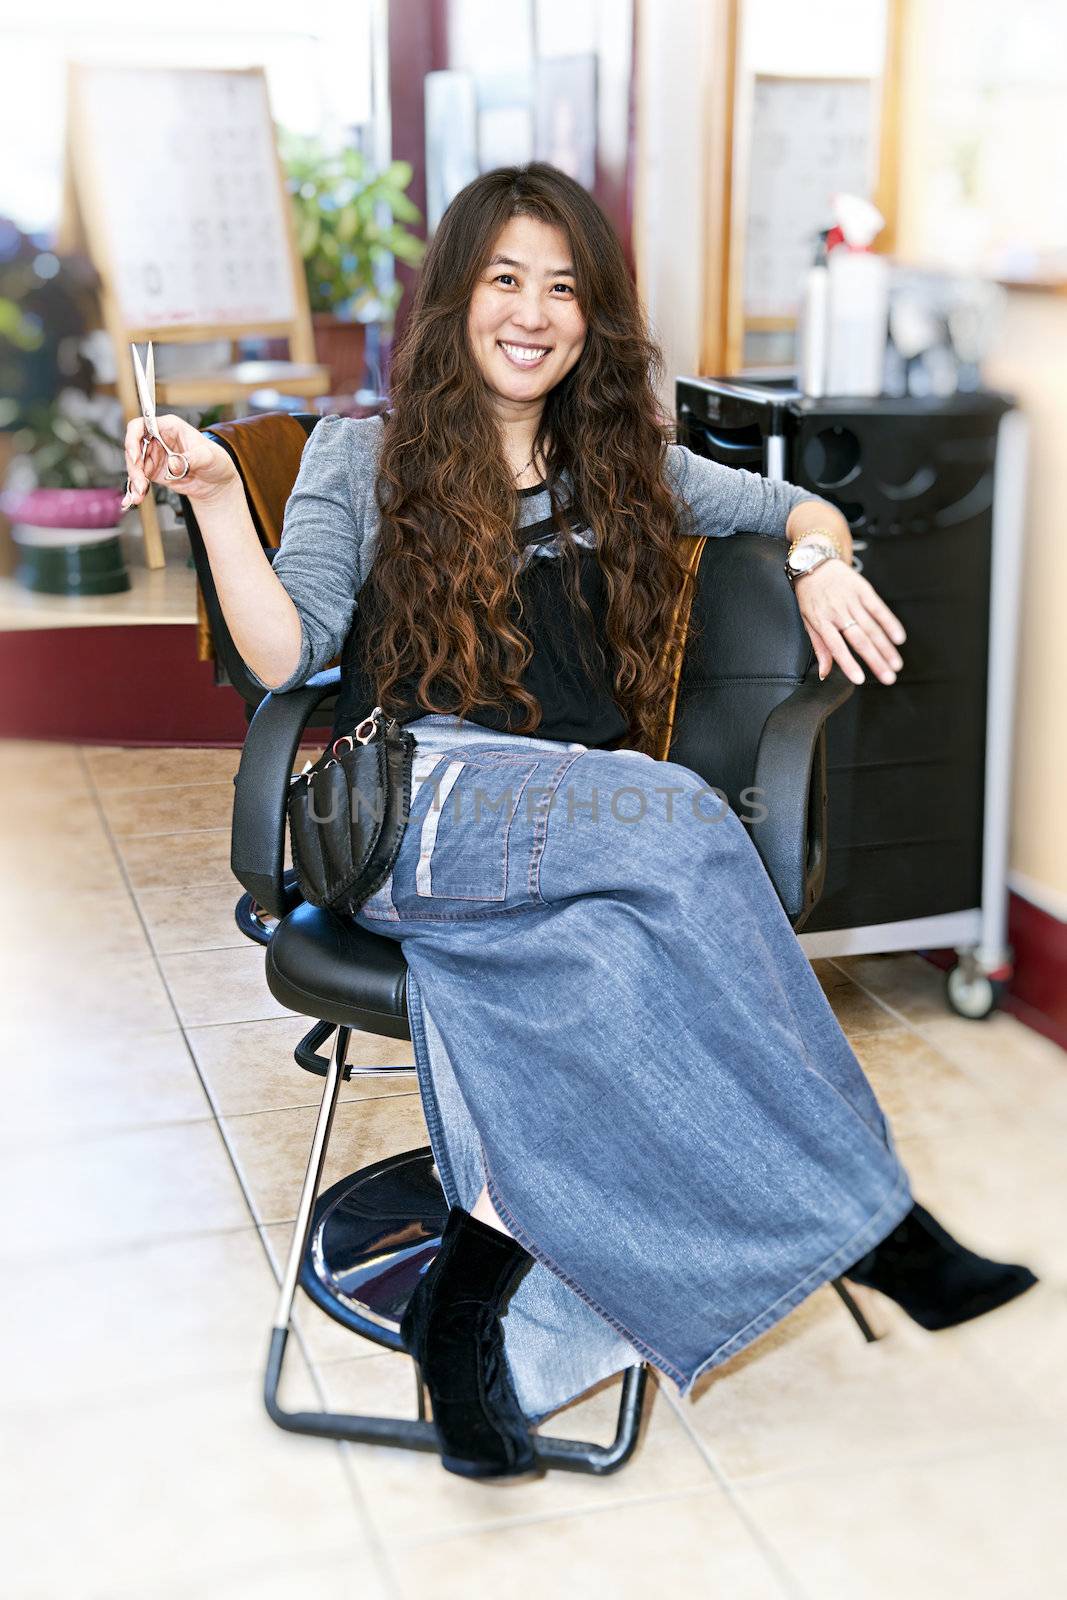 Hair stylist in salon by elenathewise